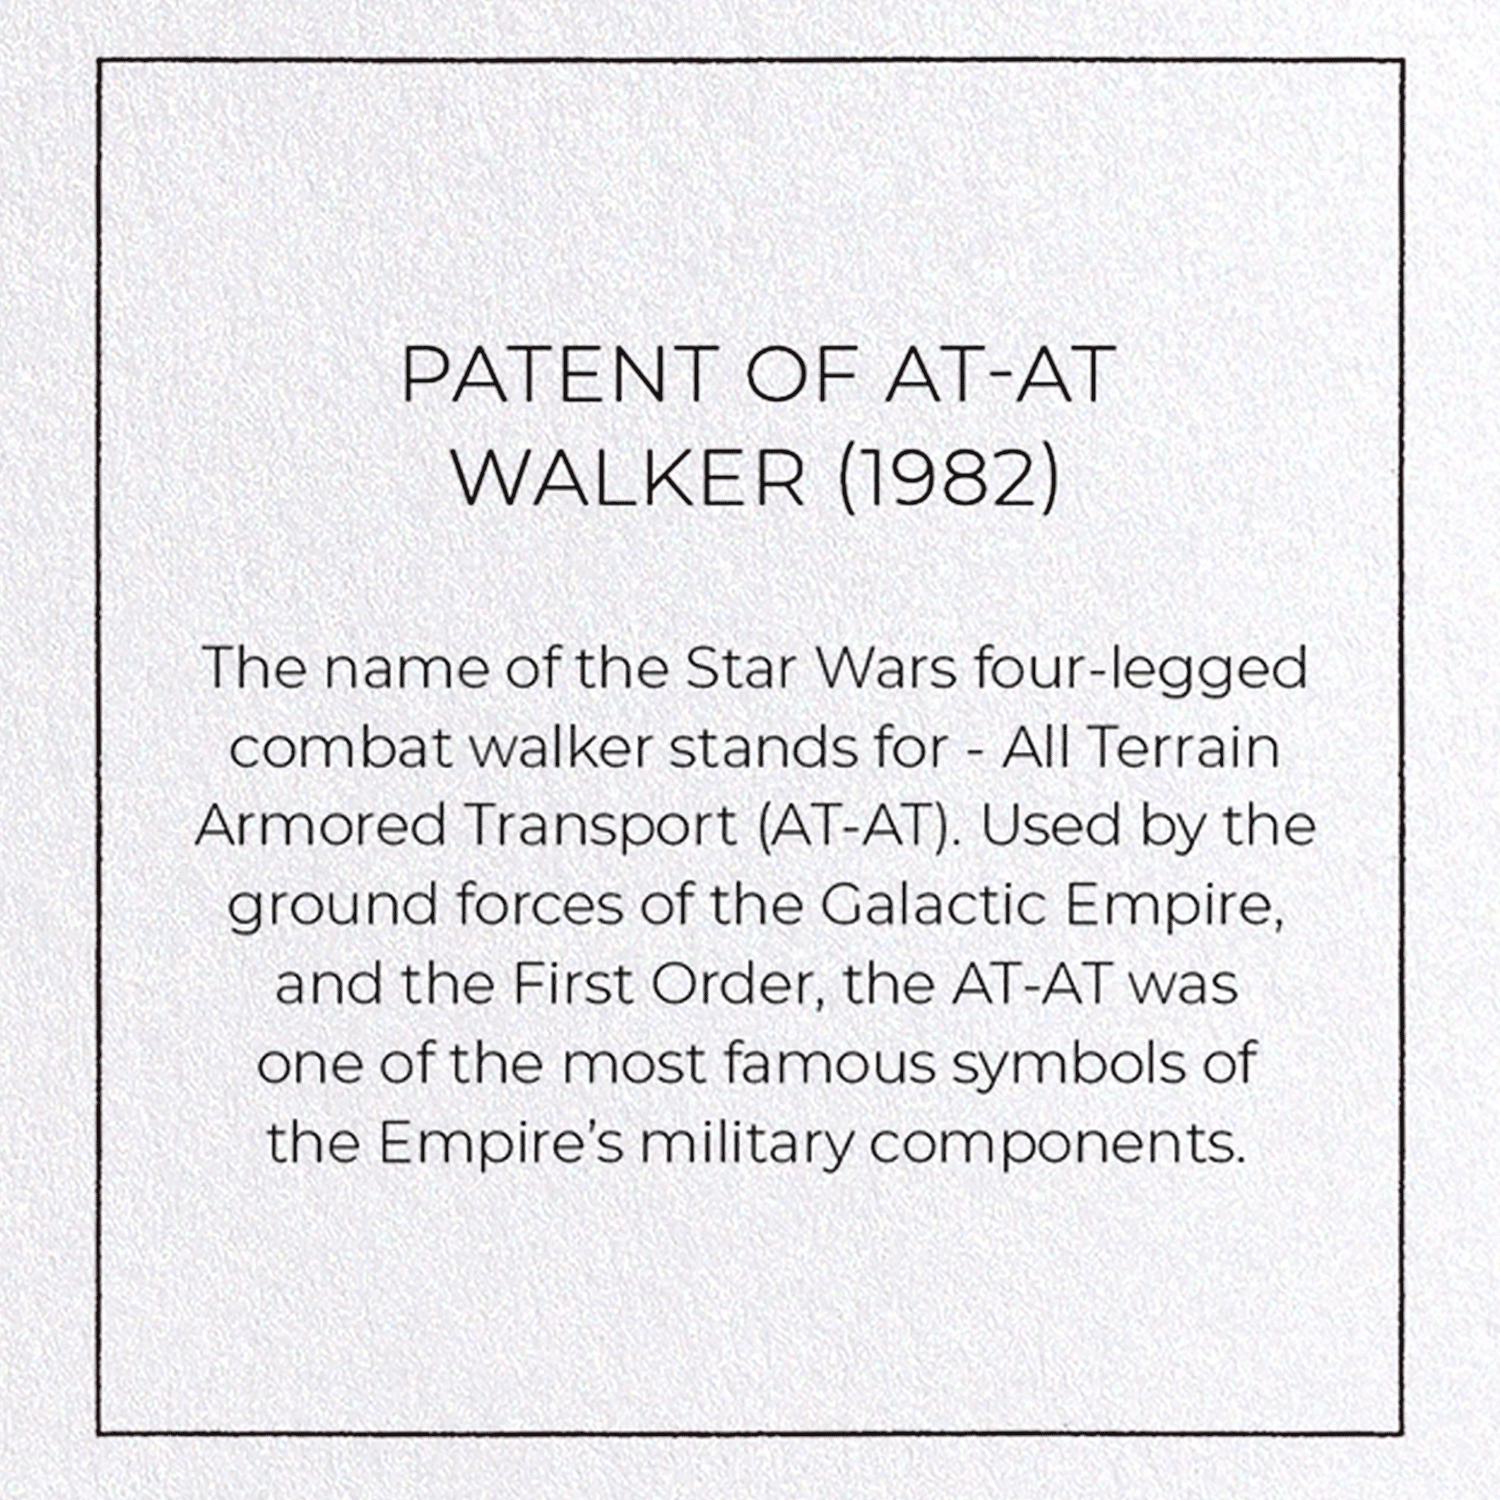 PATENT OF AT-AT WALKER (1982)